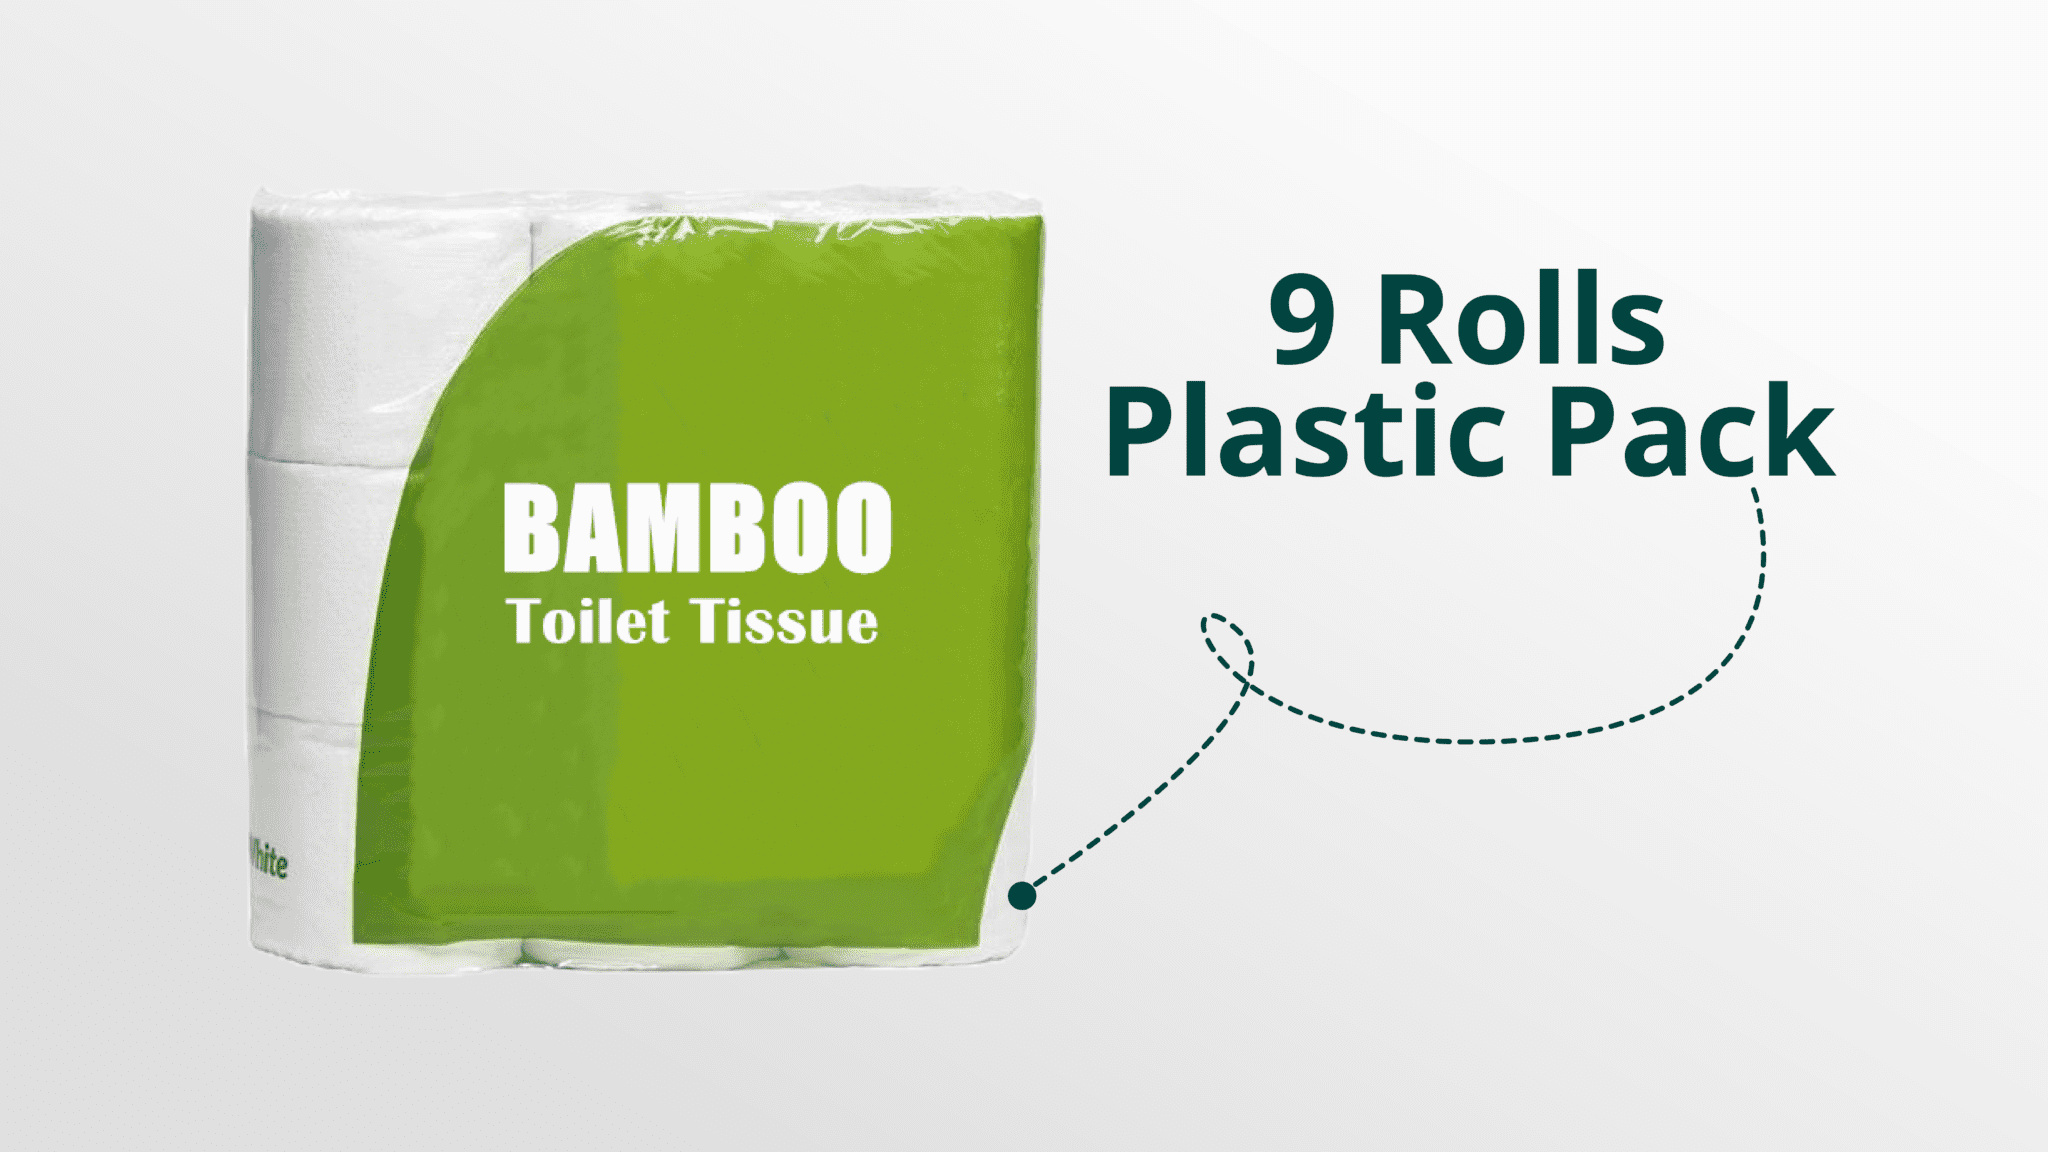 9 rolls plastic pack toilet paper